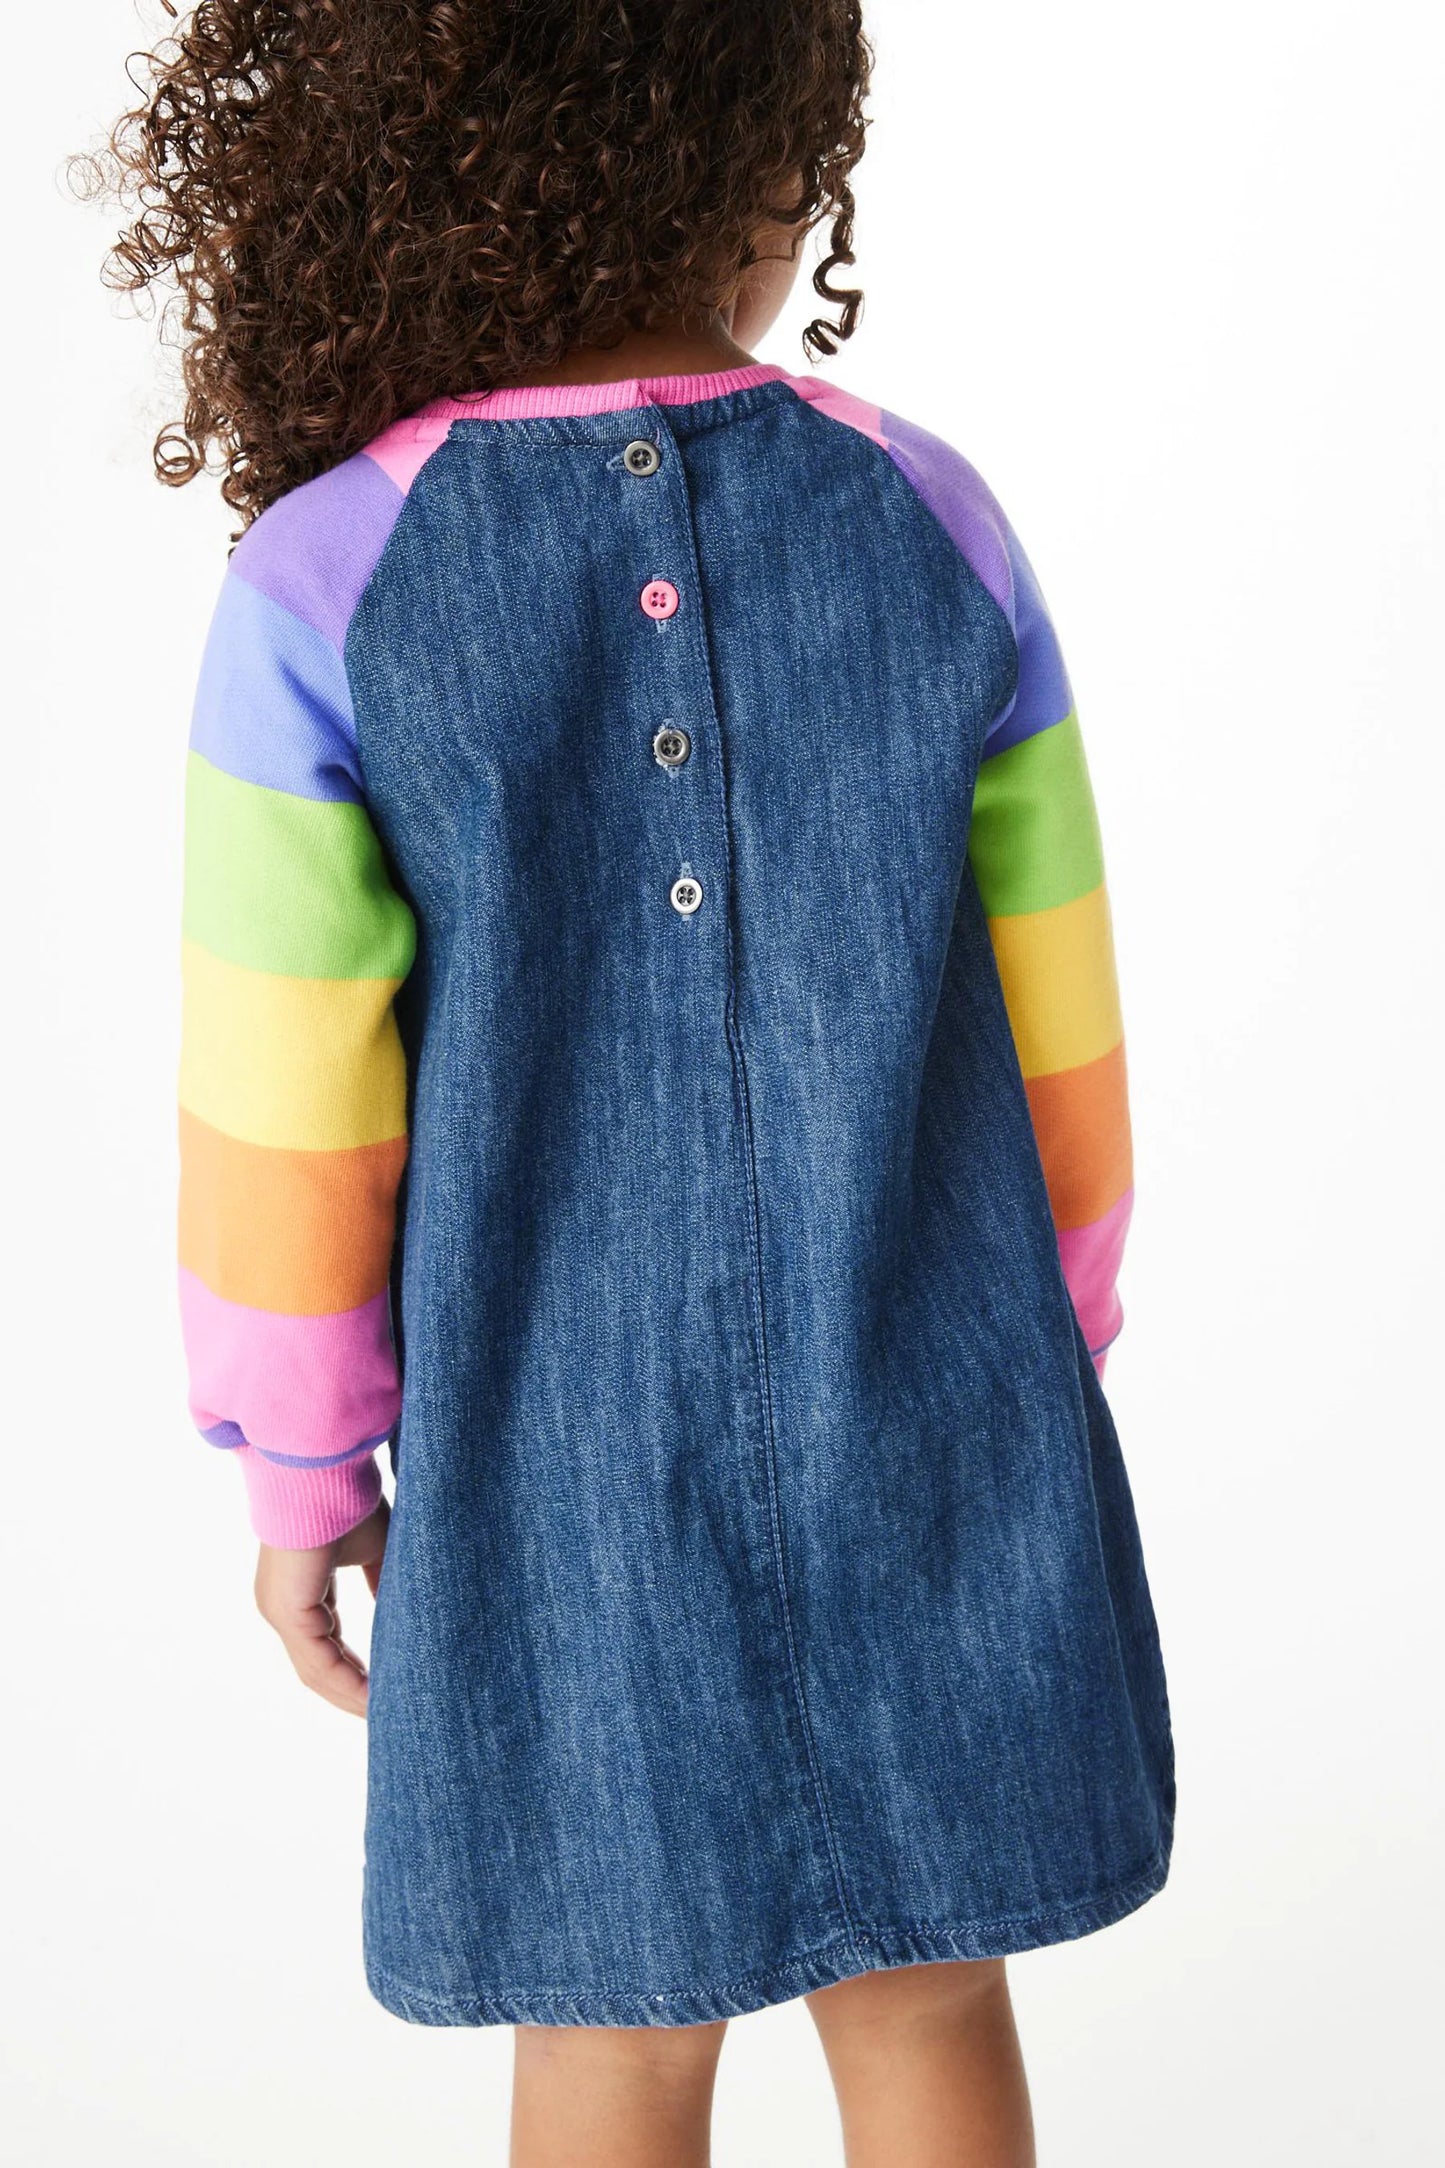 Fun Prints - Vestido jeans raglan arco-íris